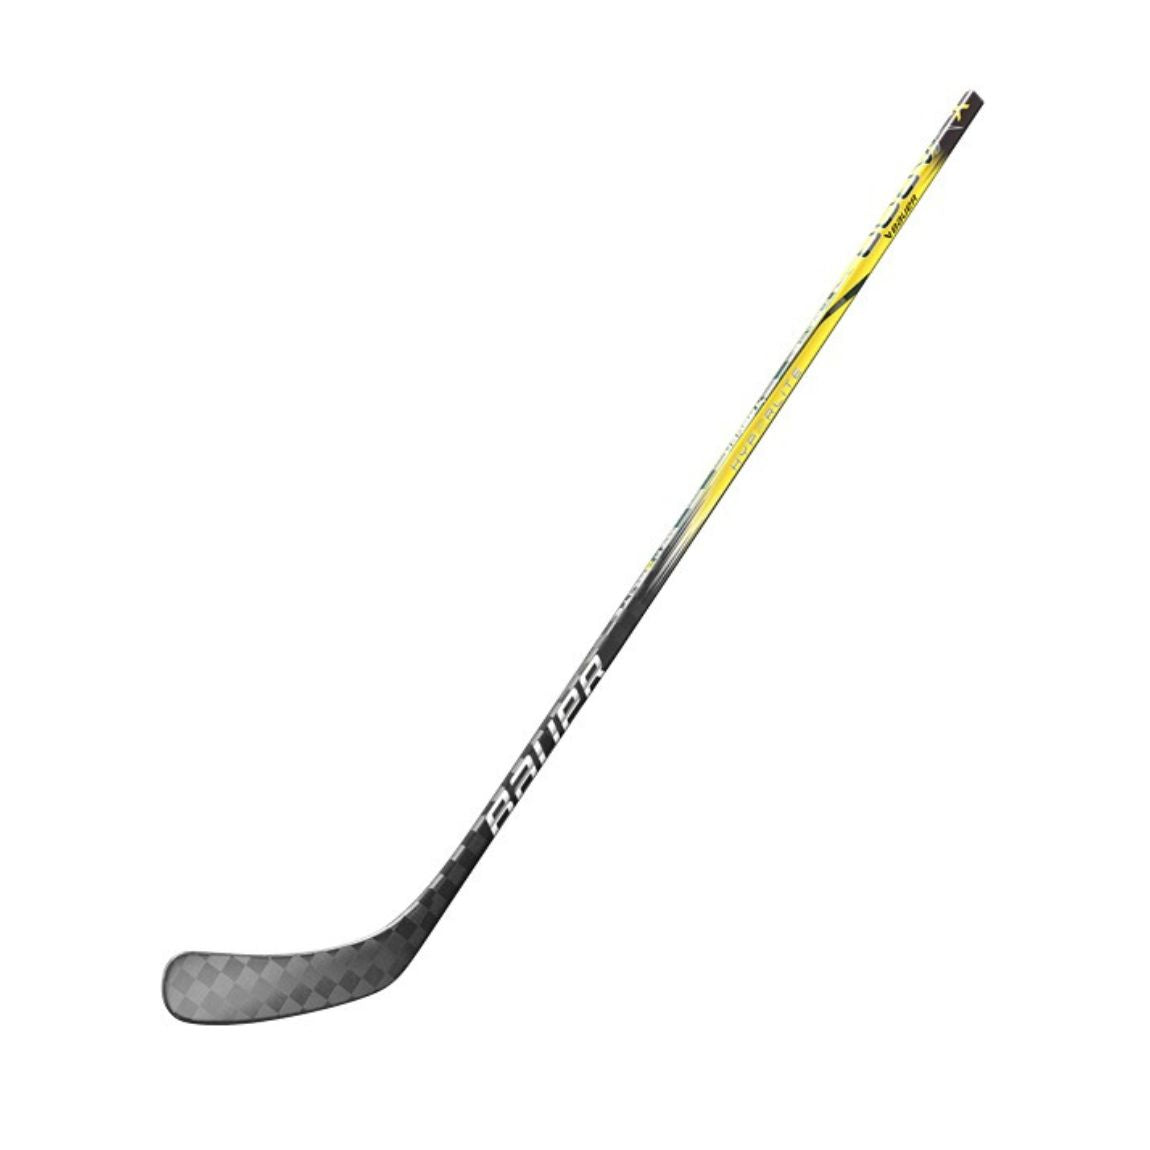 Bauer Vapor Hyperlite 2 Hockey Stick (YELLOW) - Senior